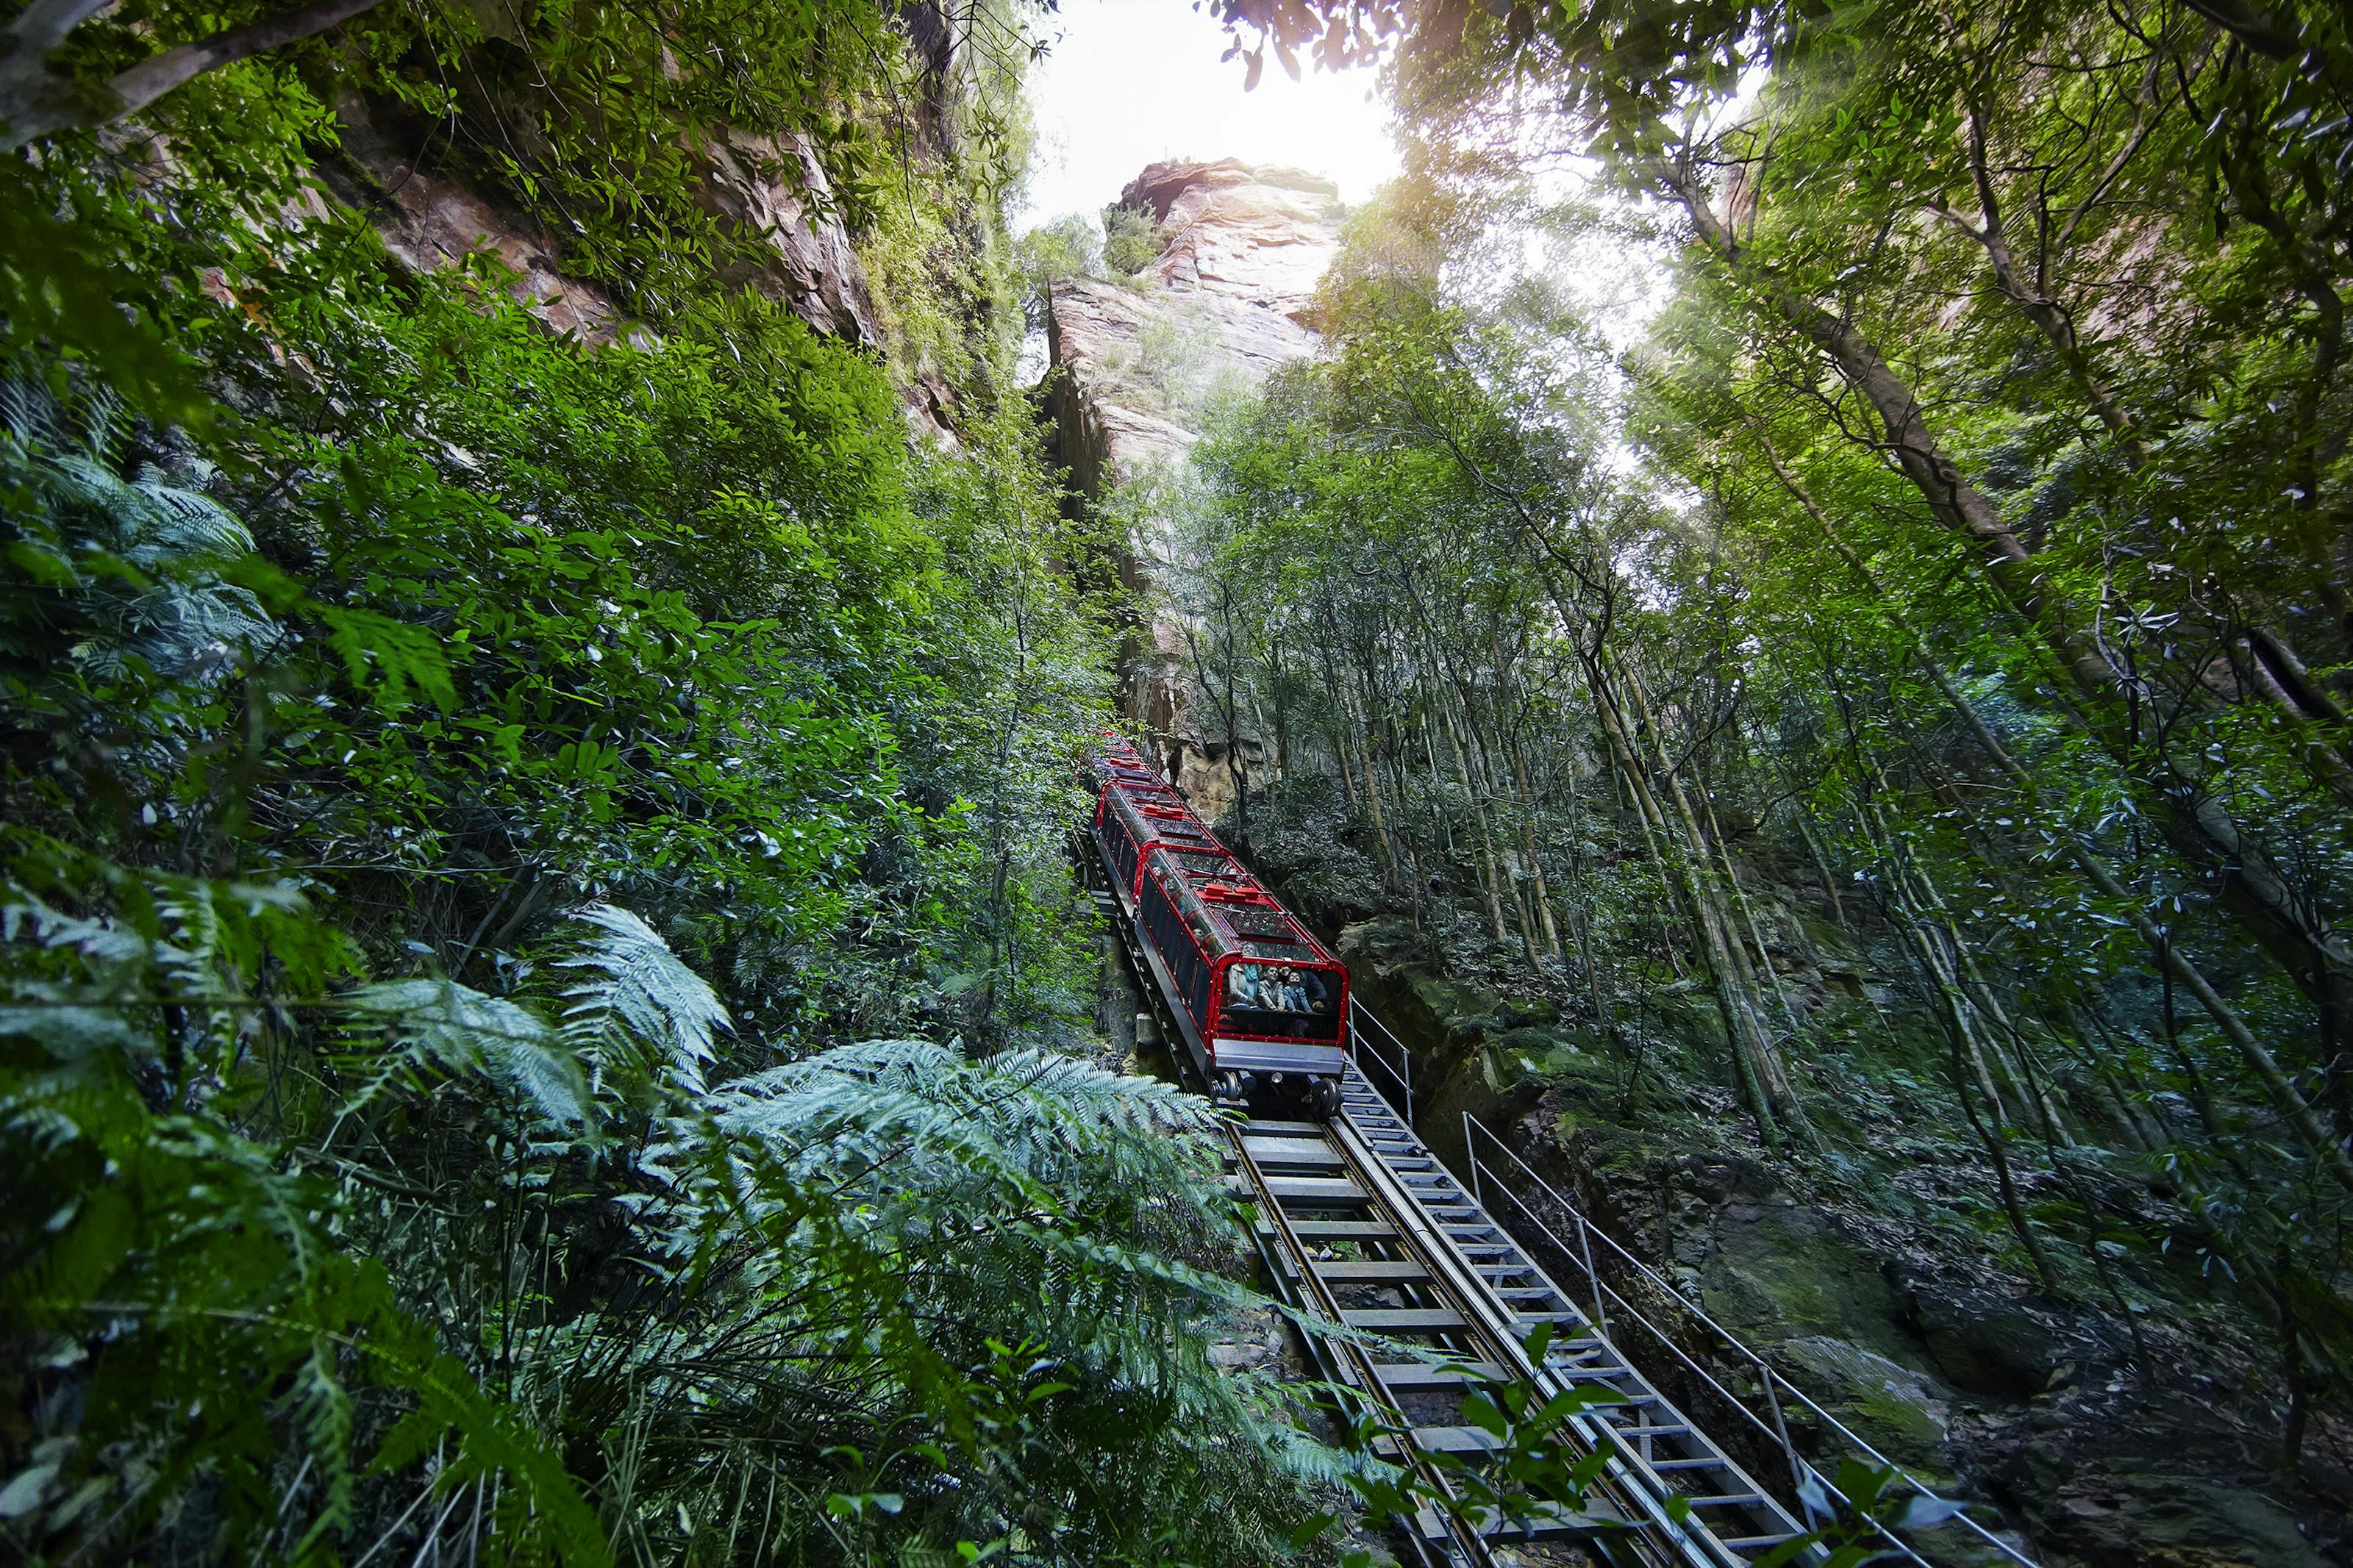 Scenic Railway descending through cliff tunnel